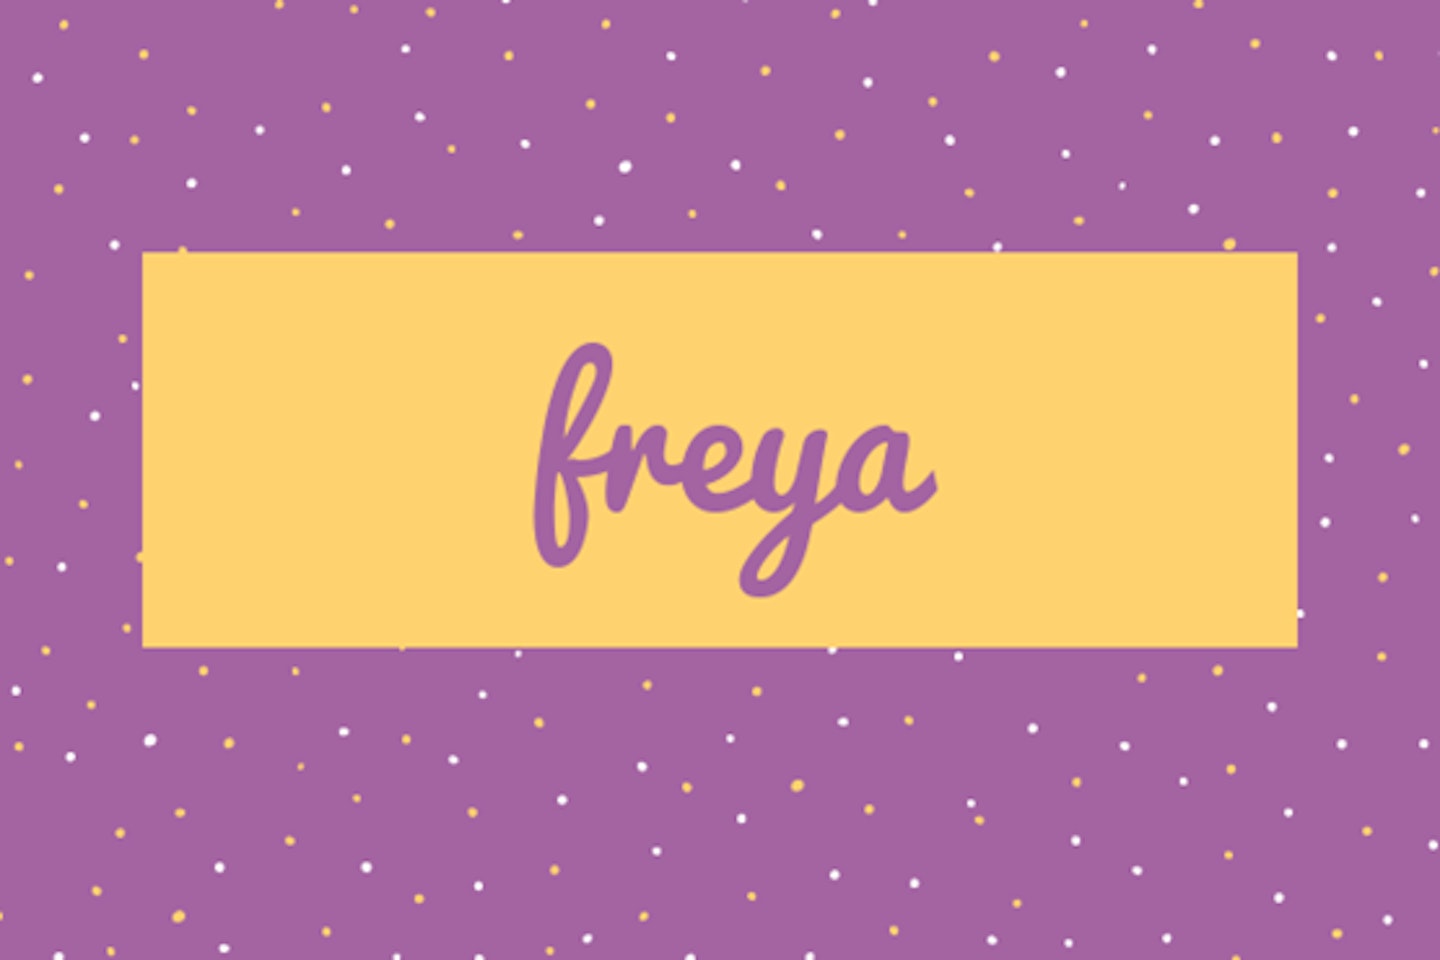 21) Freya